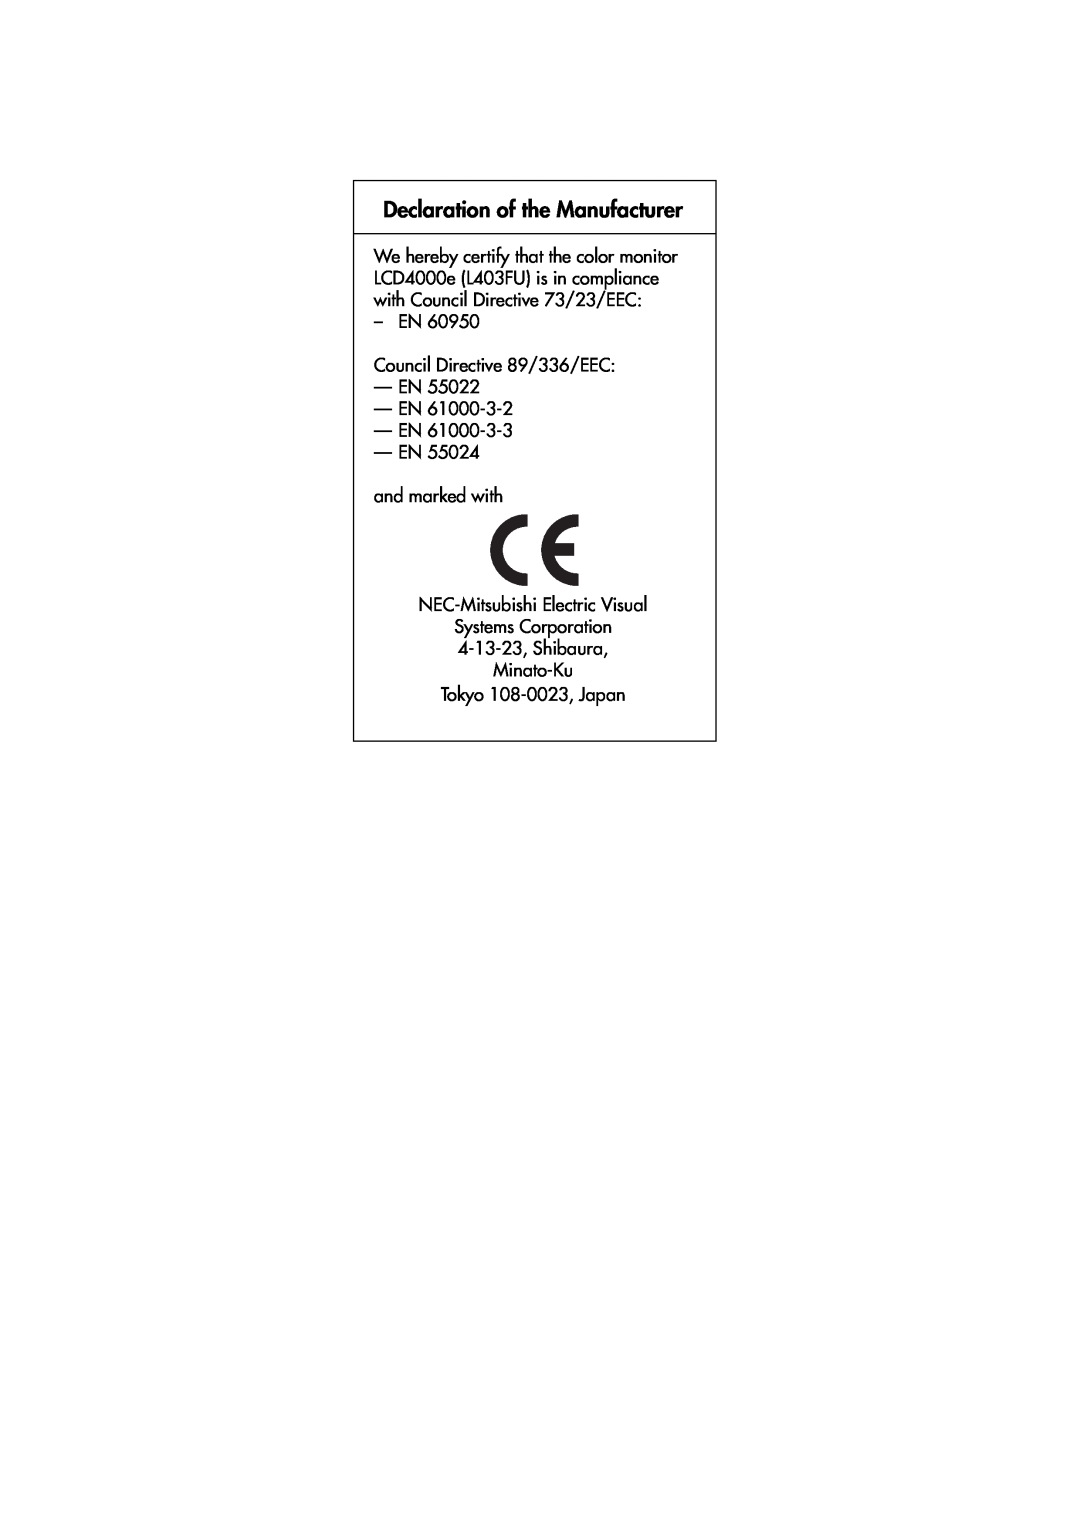 NEC LCD4000e manual Declaration of the Manufacturer, EN Council Directive 89/336/EEC -EN -EN -EN -EN, Tokyo 108-0023,Japan 